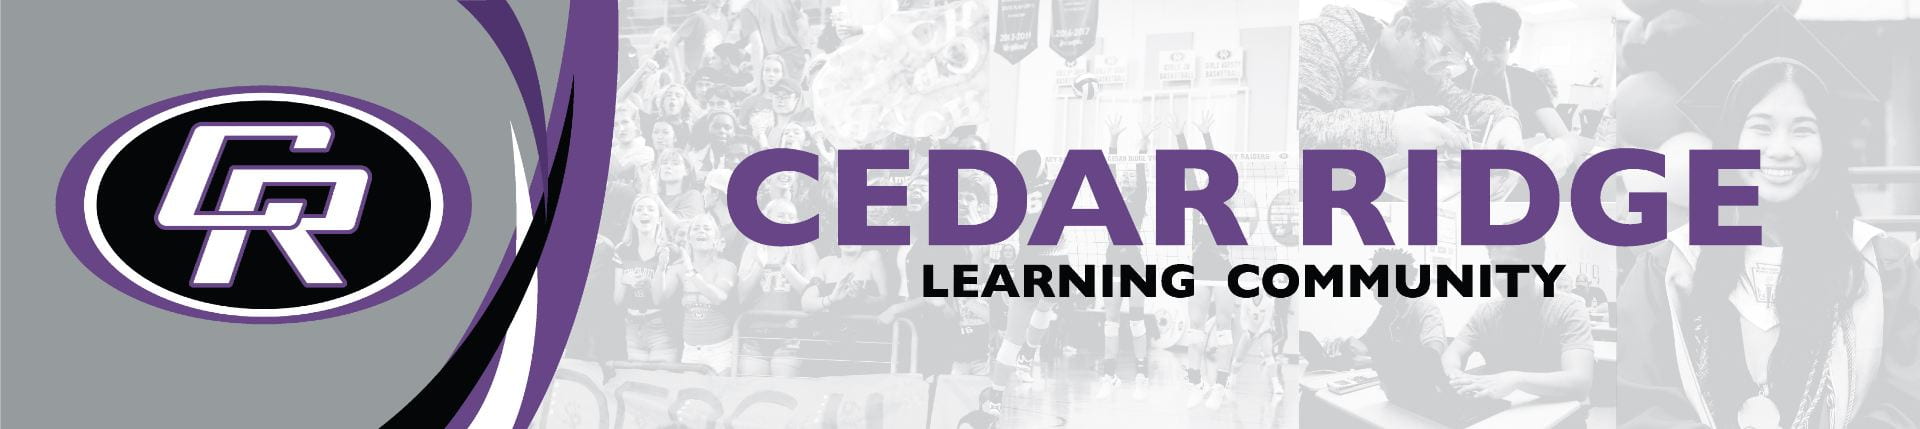 Cedar Ridge Learning Community